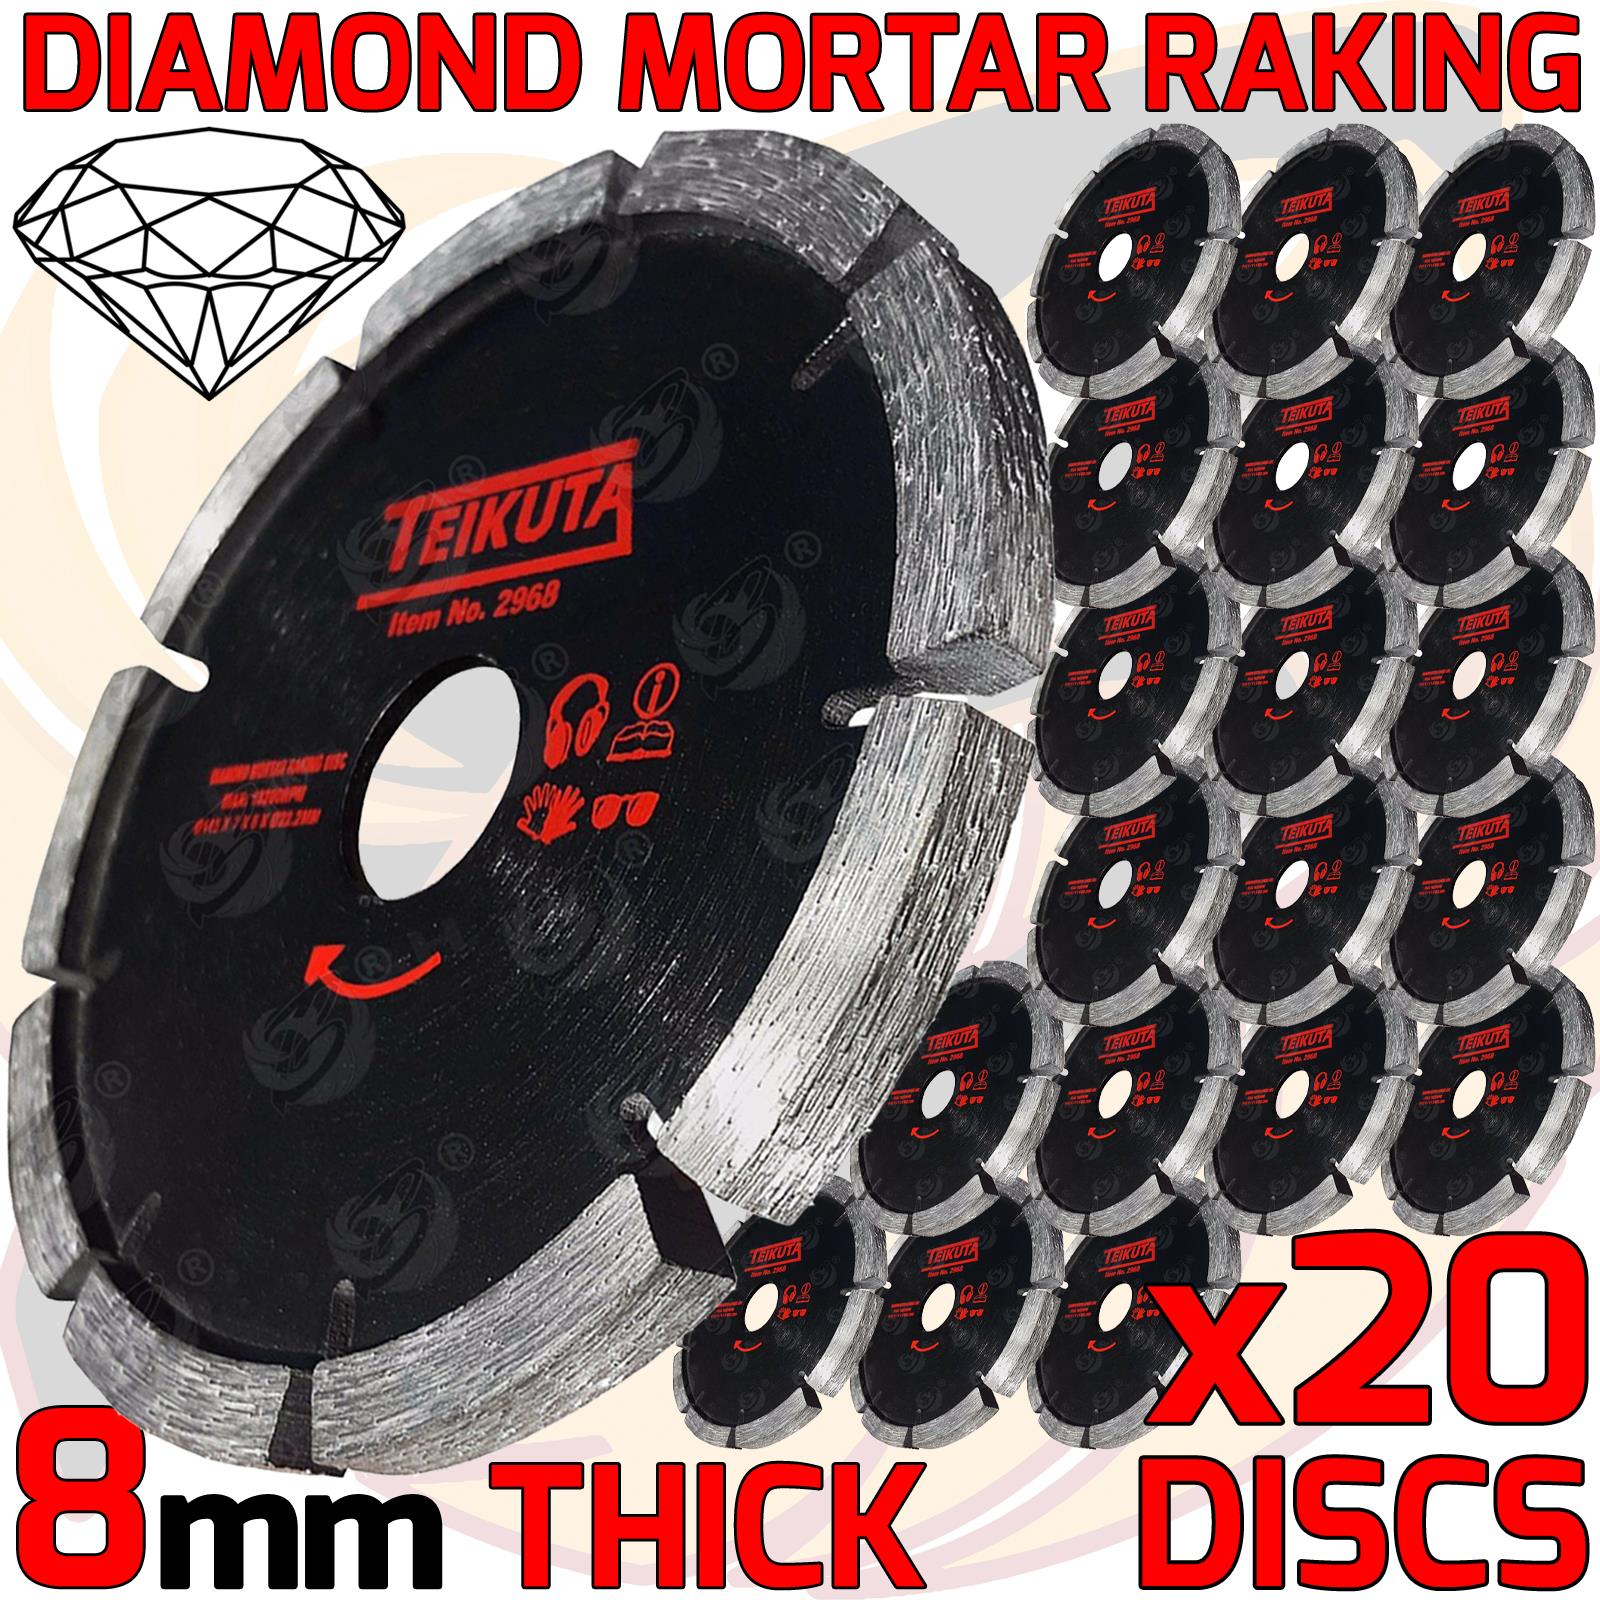 TEIKUTA 4.5" ( 115MM ) DIAMOND MORTAR RAKING DISC ( X 20 )